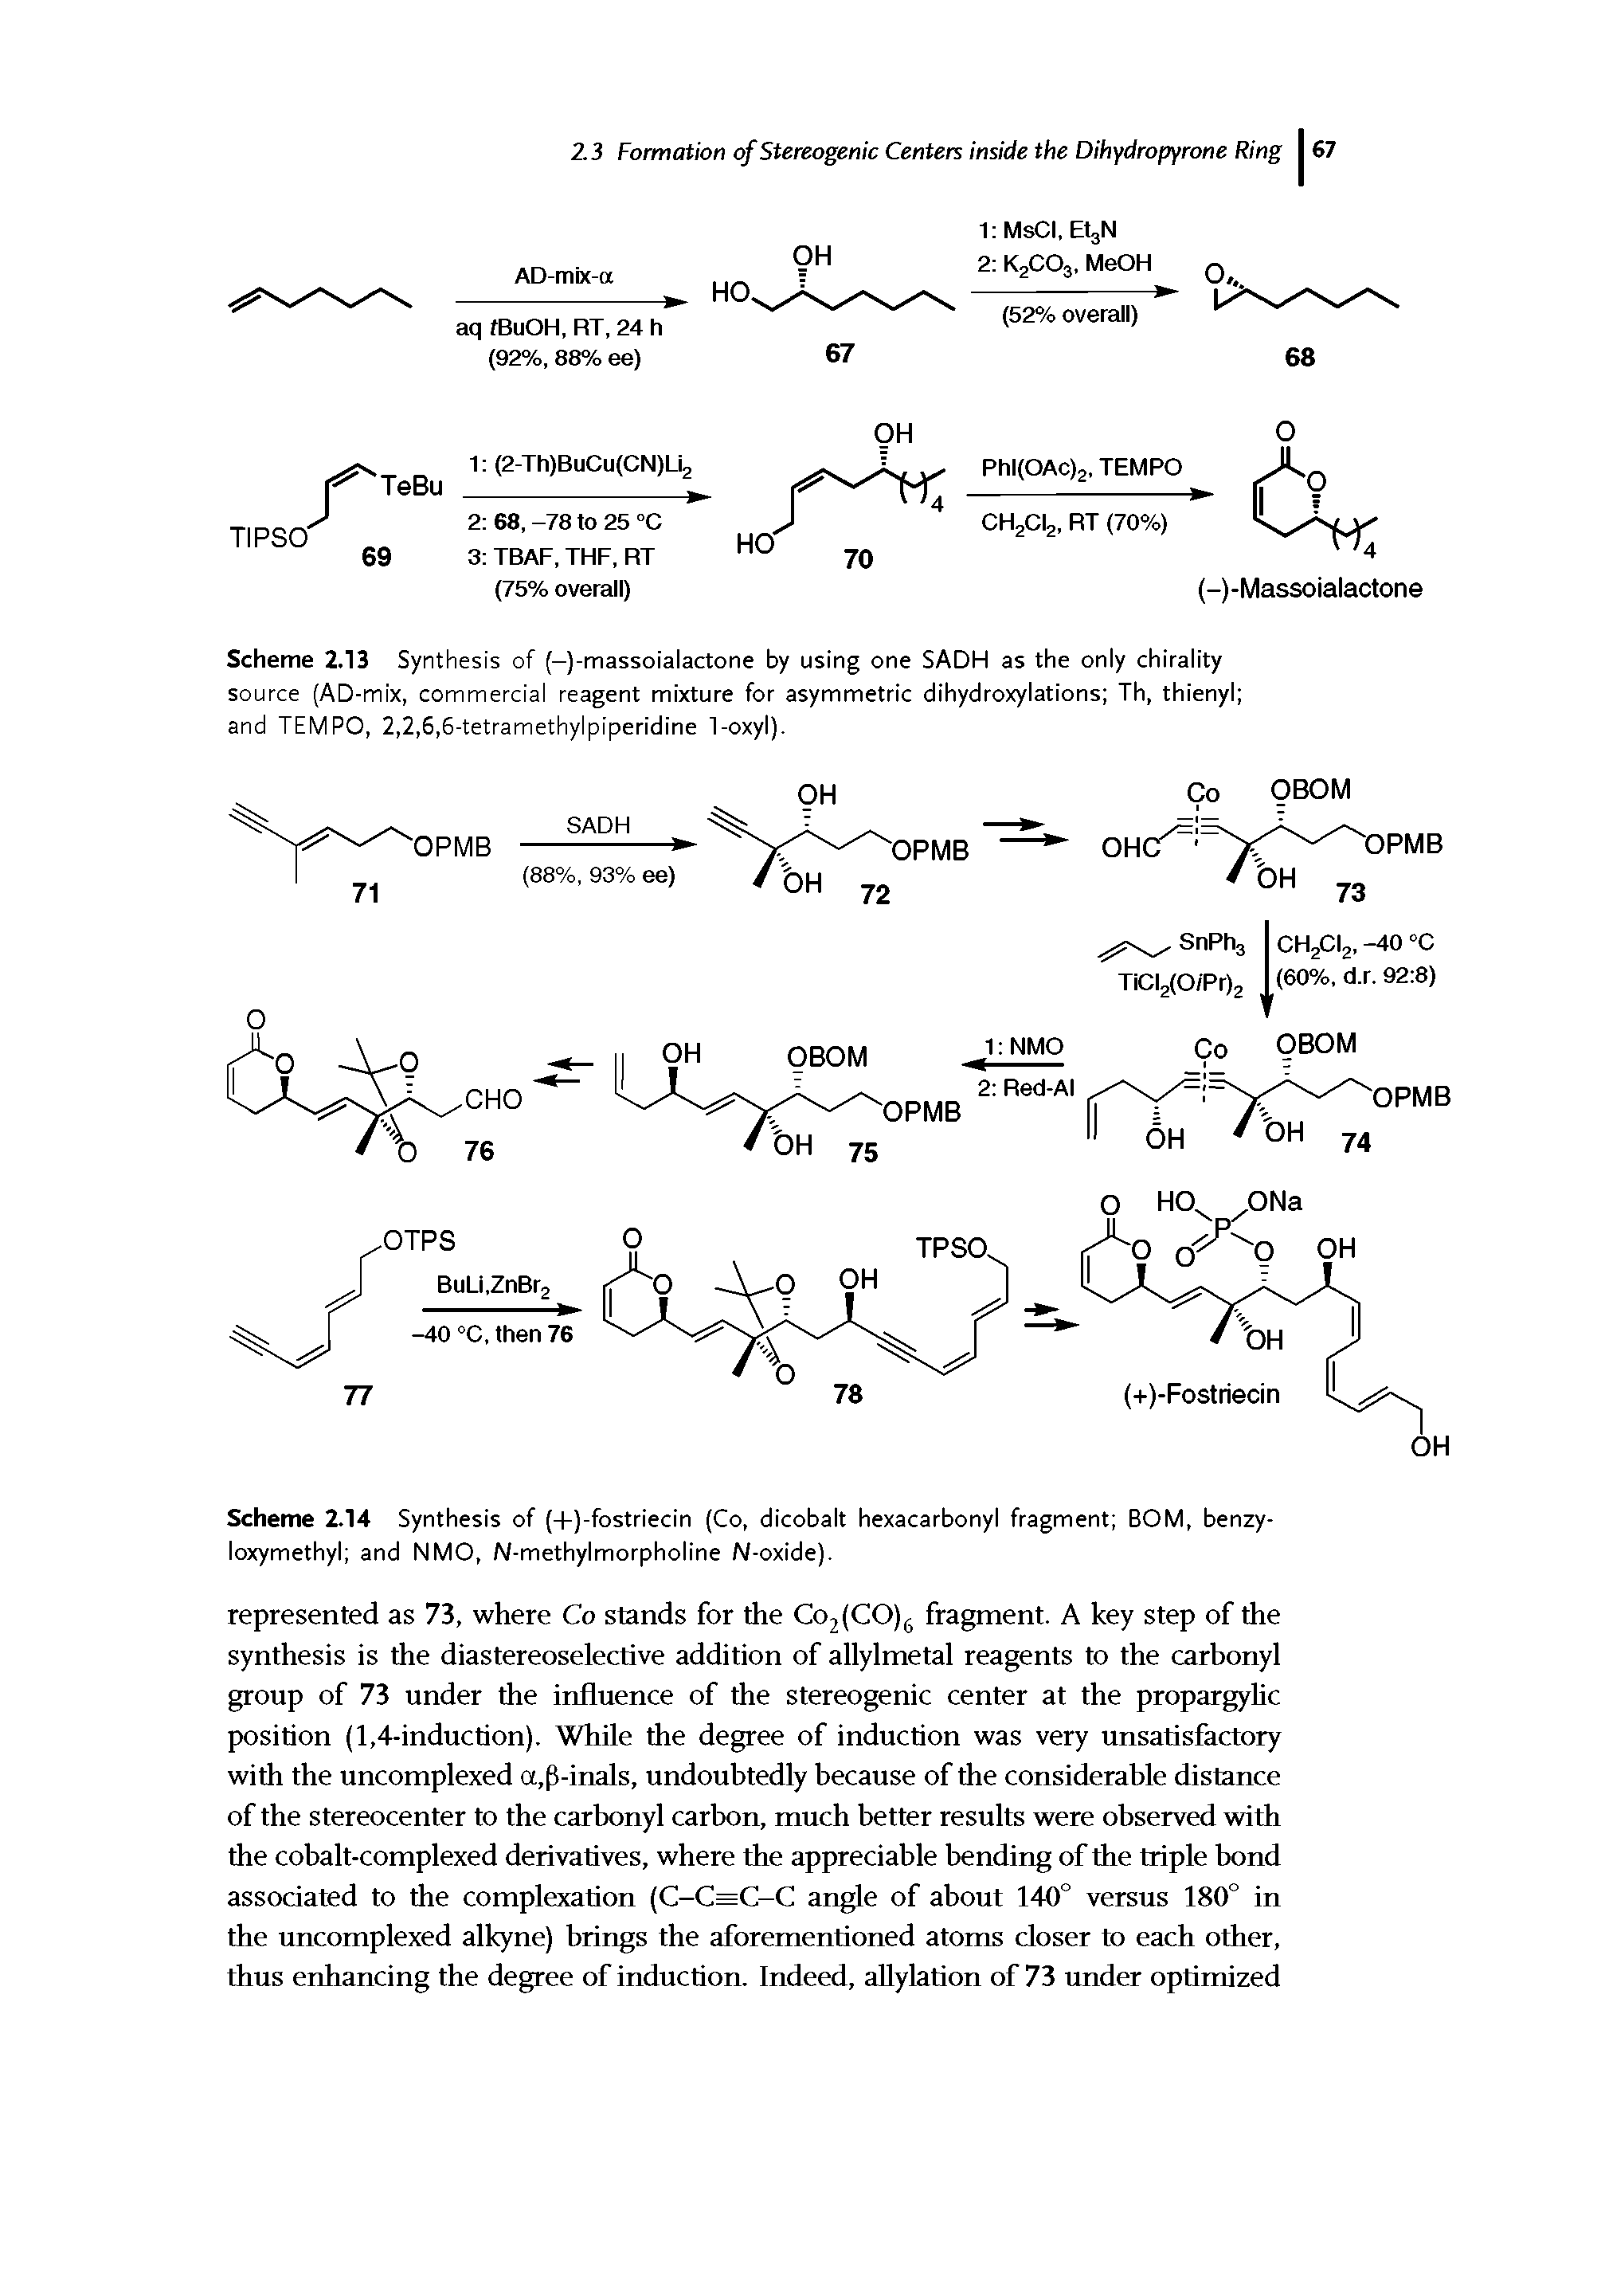 Scheme 2.14 Synthesis of (+)-fostriecin (Co, dicobalt hexacarbonyl fragment BOM, benzy-loxymethyl and NMO, N-methylmorpholine N-oxide).